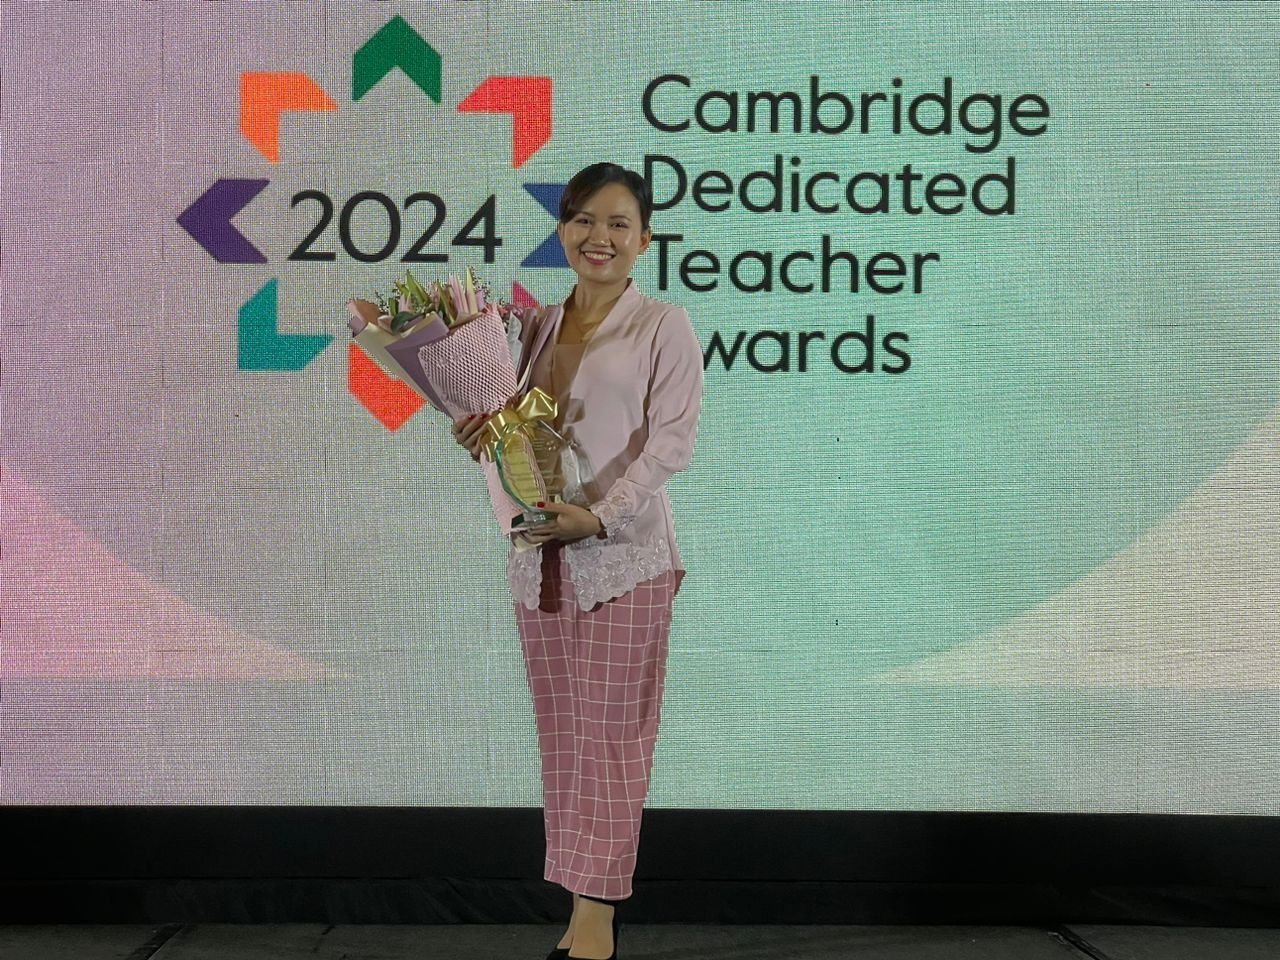 Sydney engelbert, named world best educator by cambridge